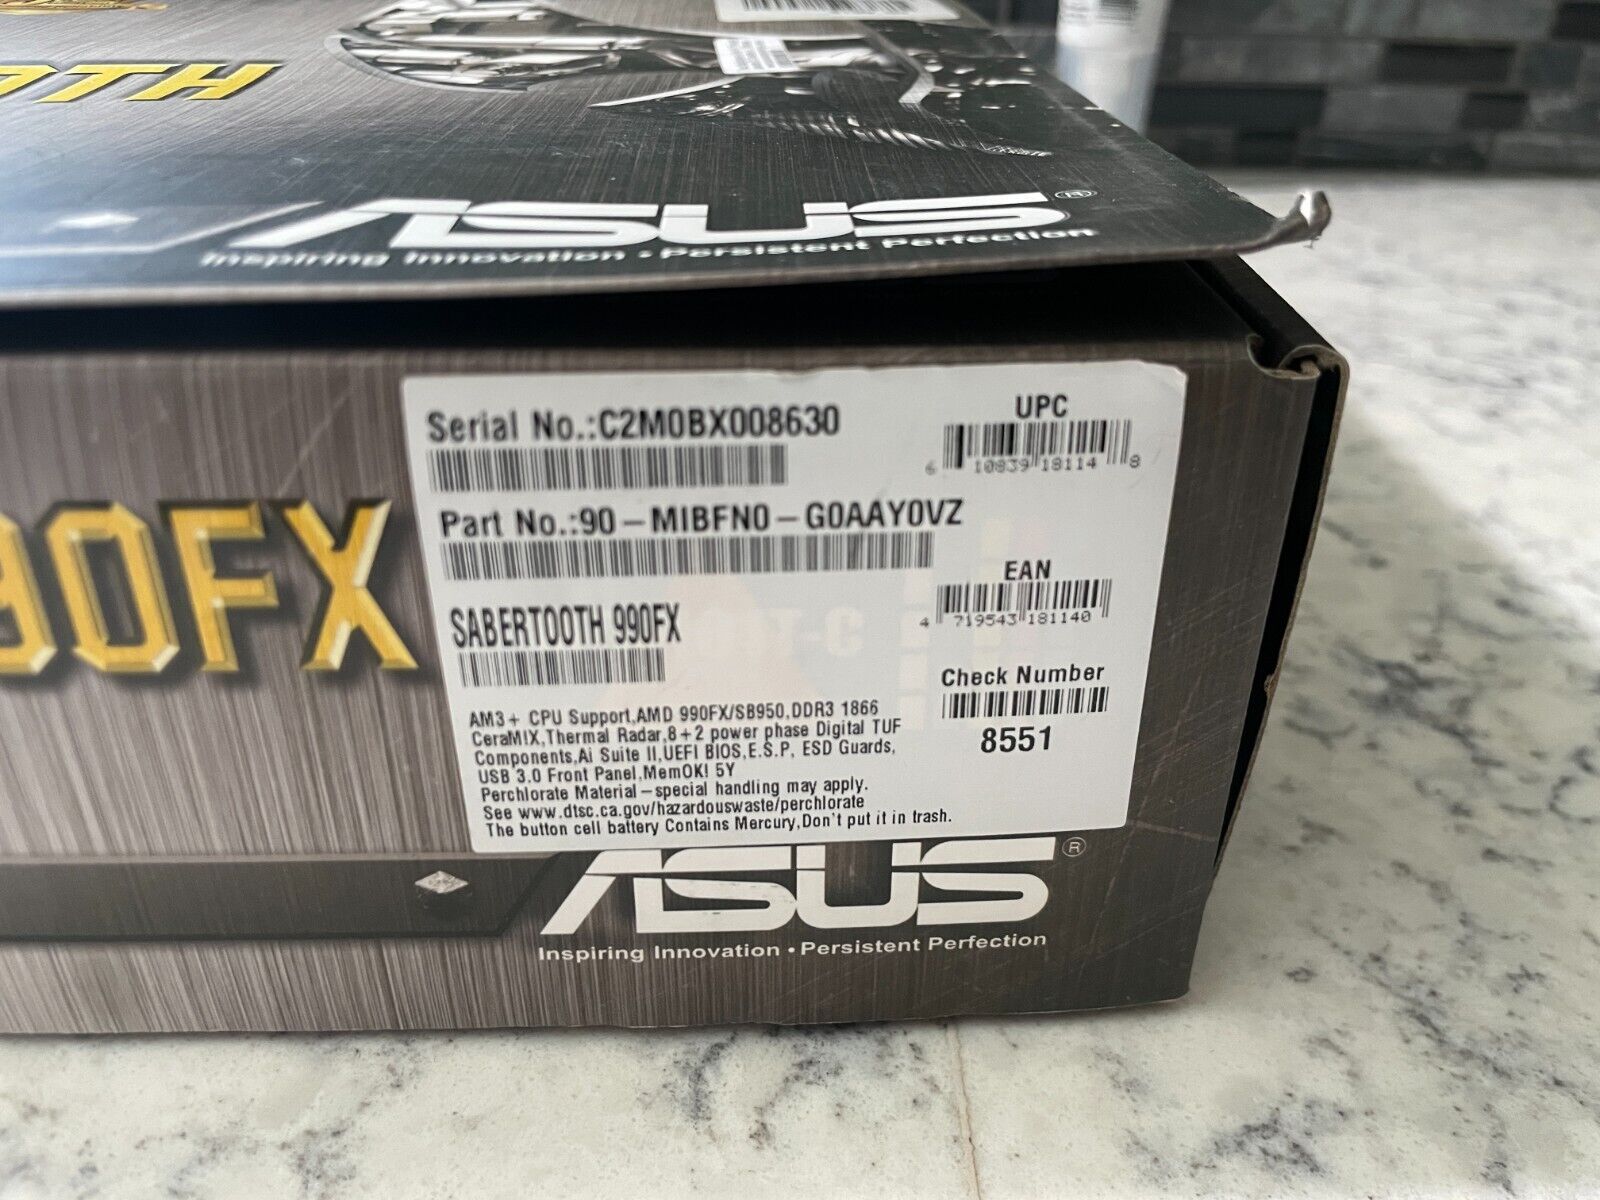 ASUS SABERTOOTH 990FX, AM3+, AMD Motherboard Rev 1.01